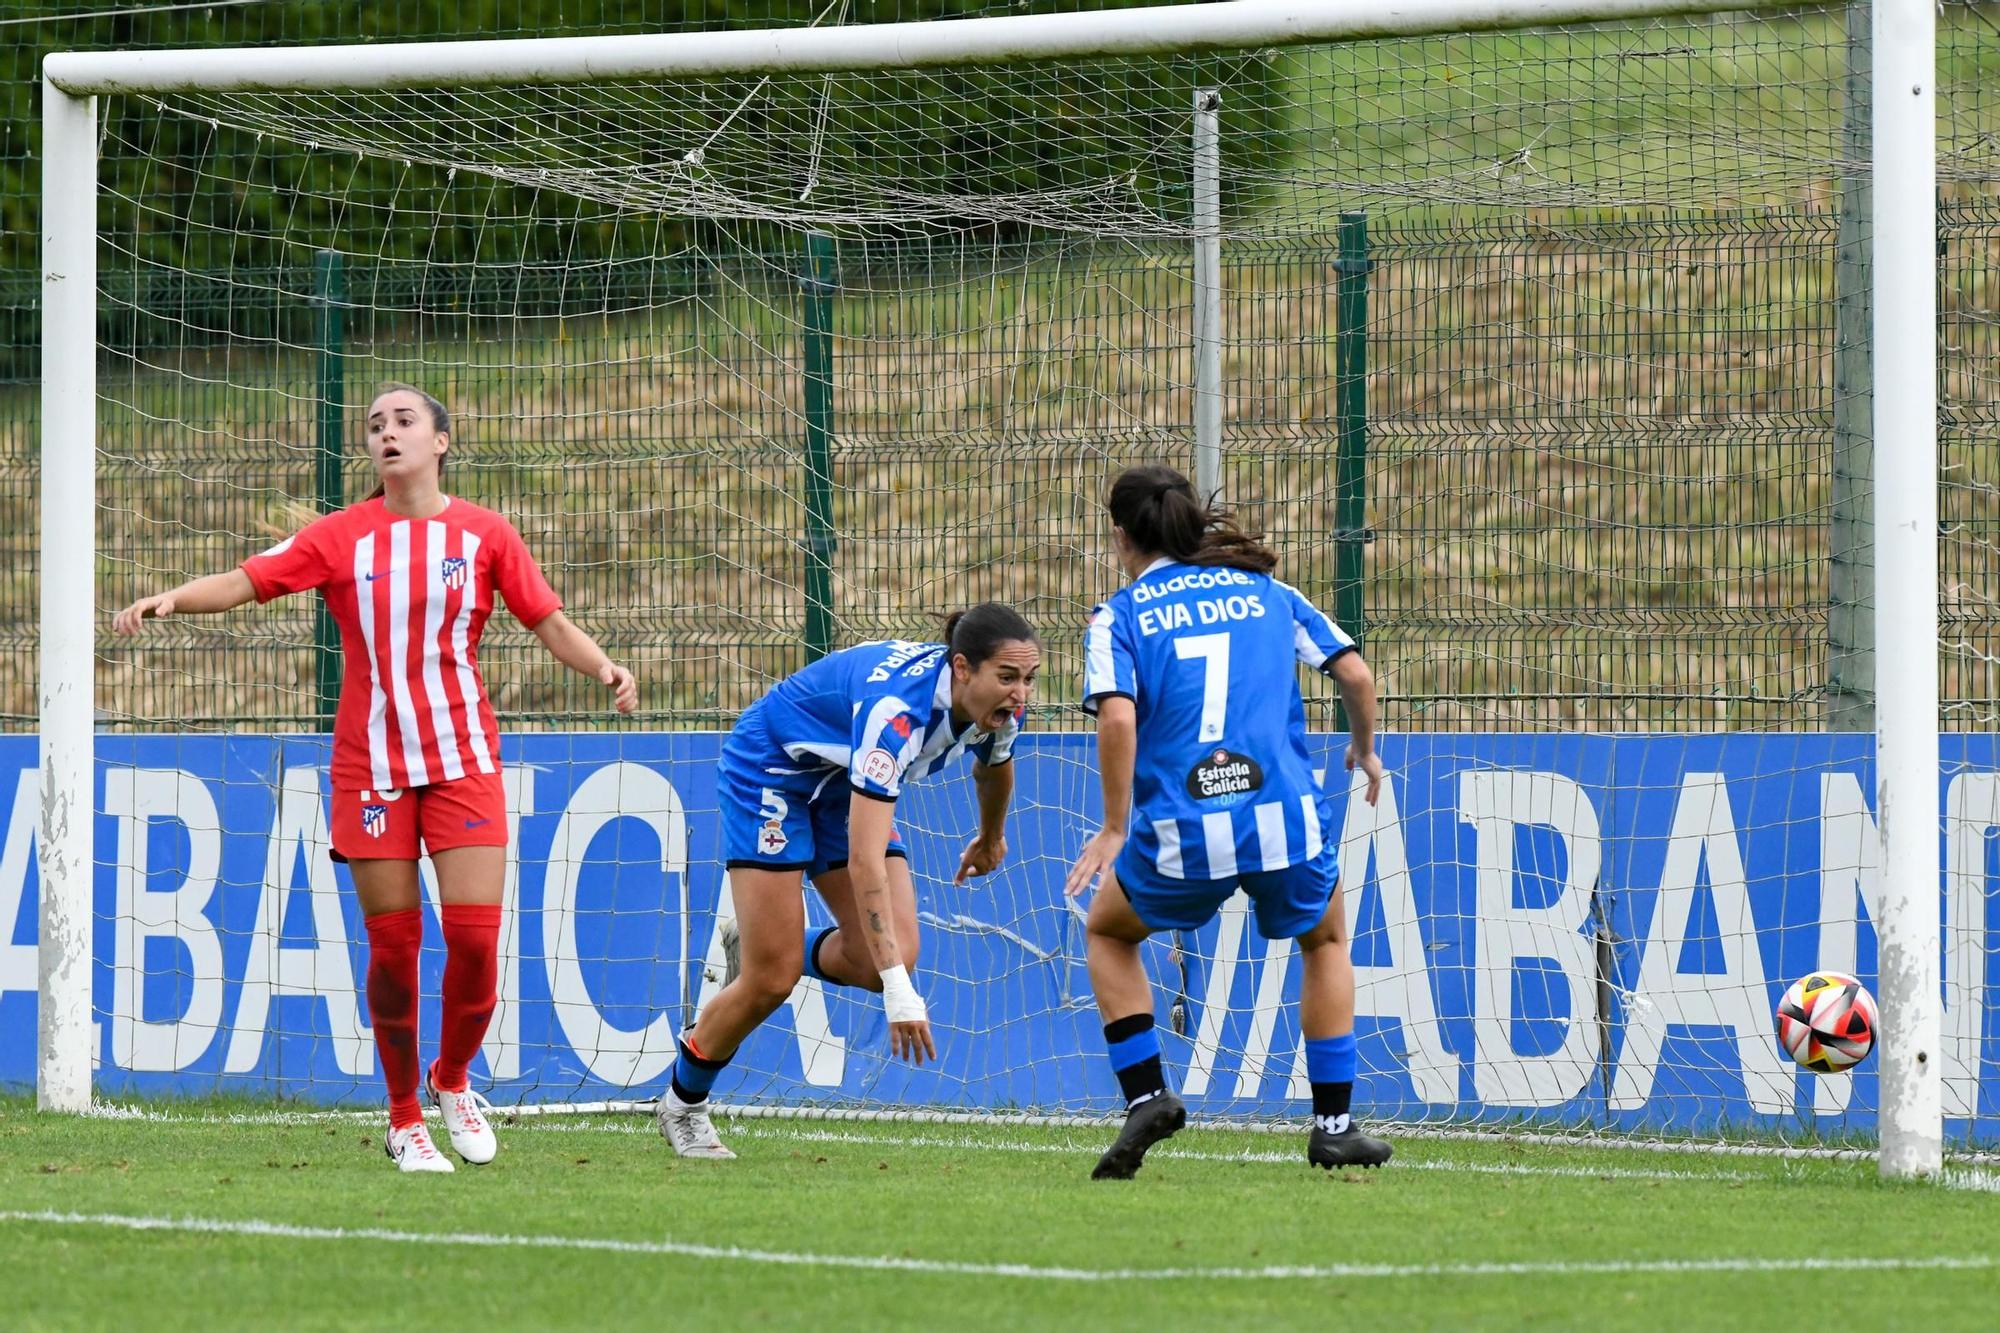 Inés Altamira rescata al Dépor Abanca frente al Atlético de Madrid B (2-1)